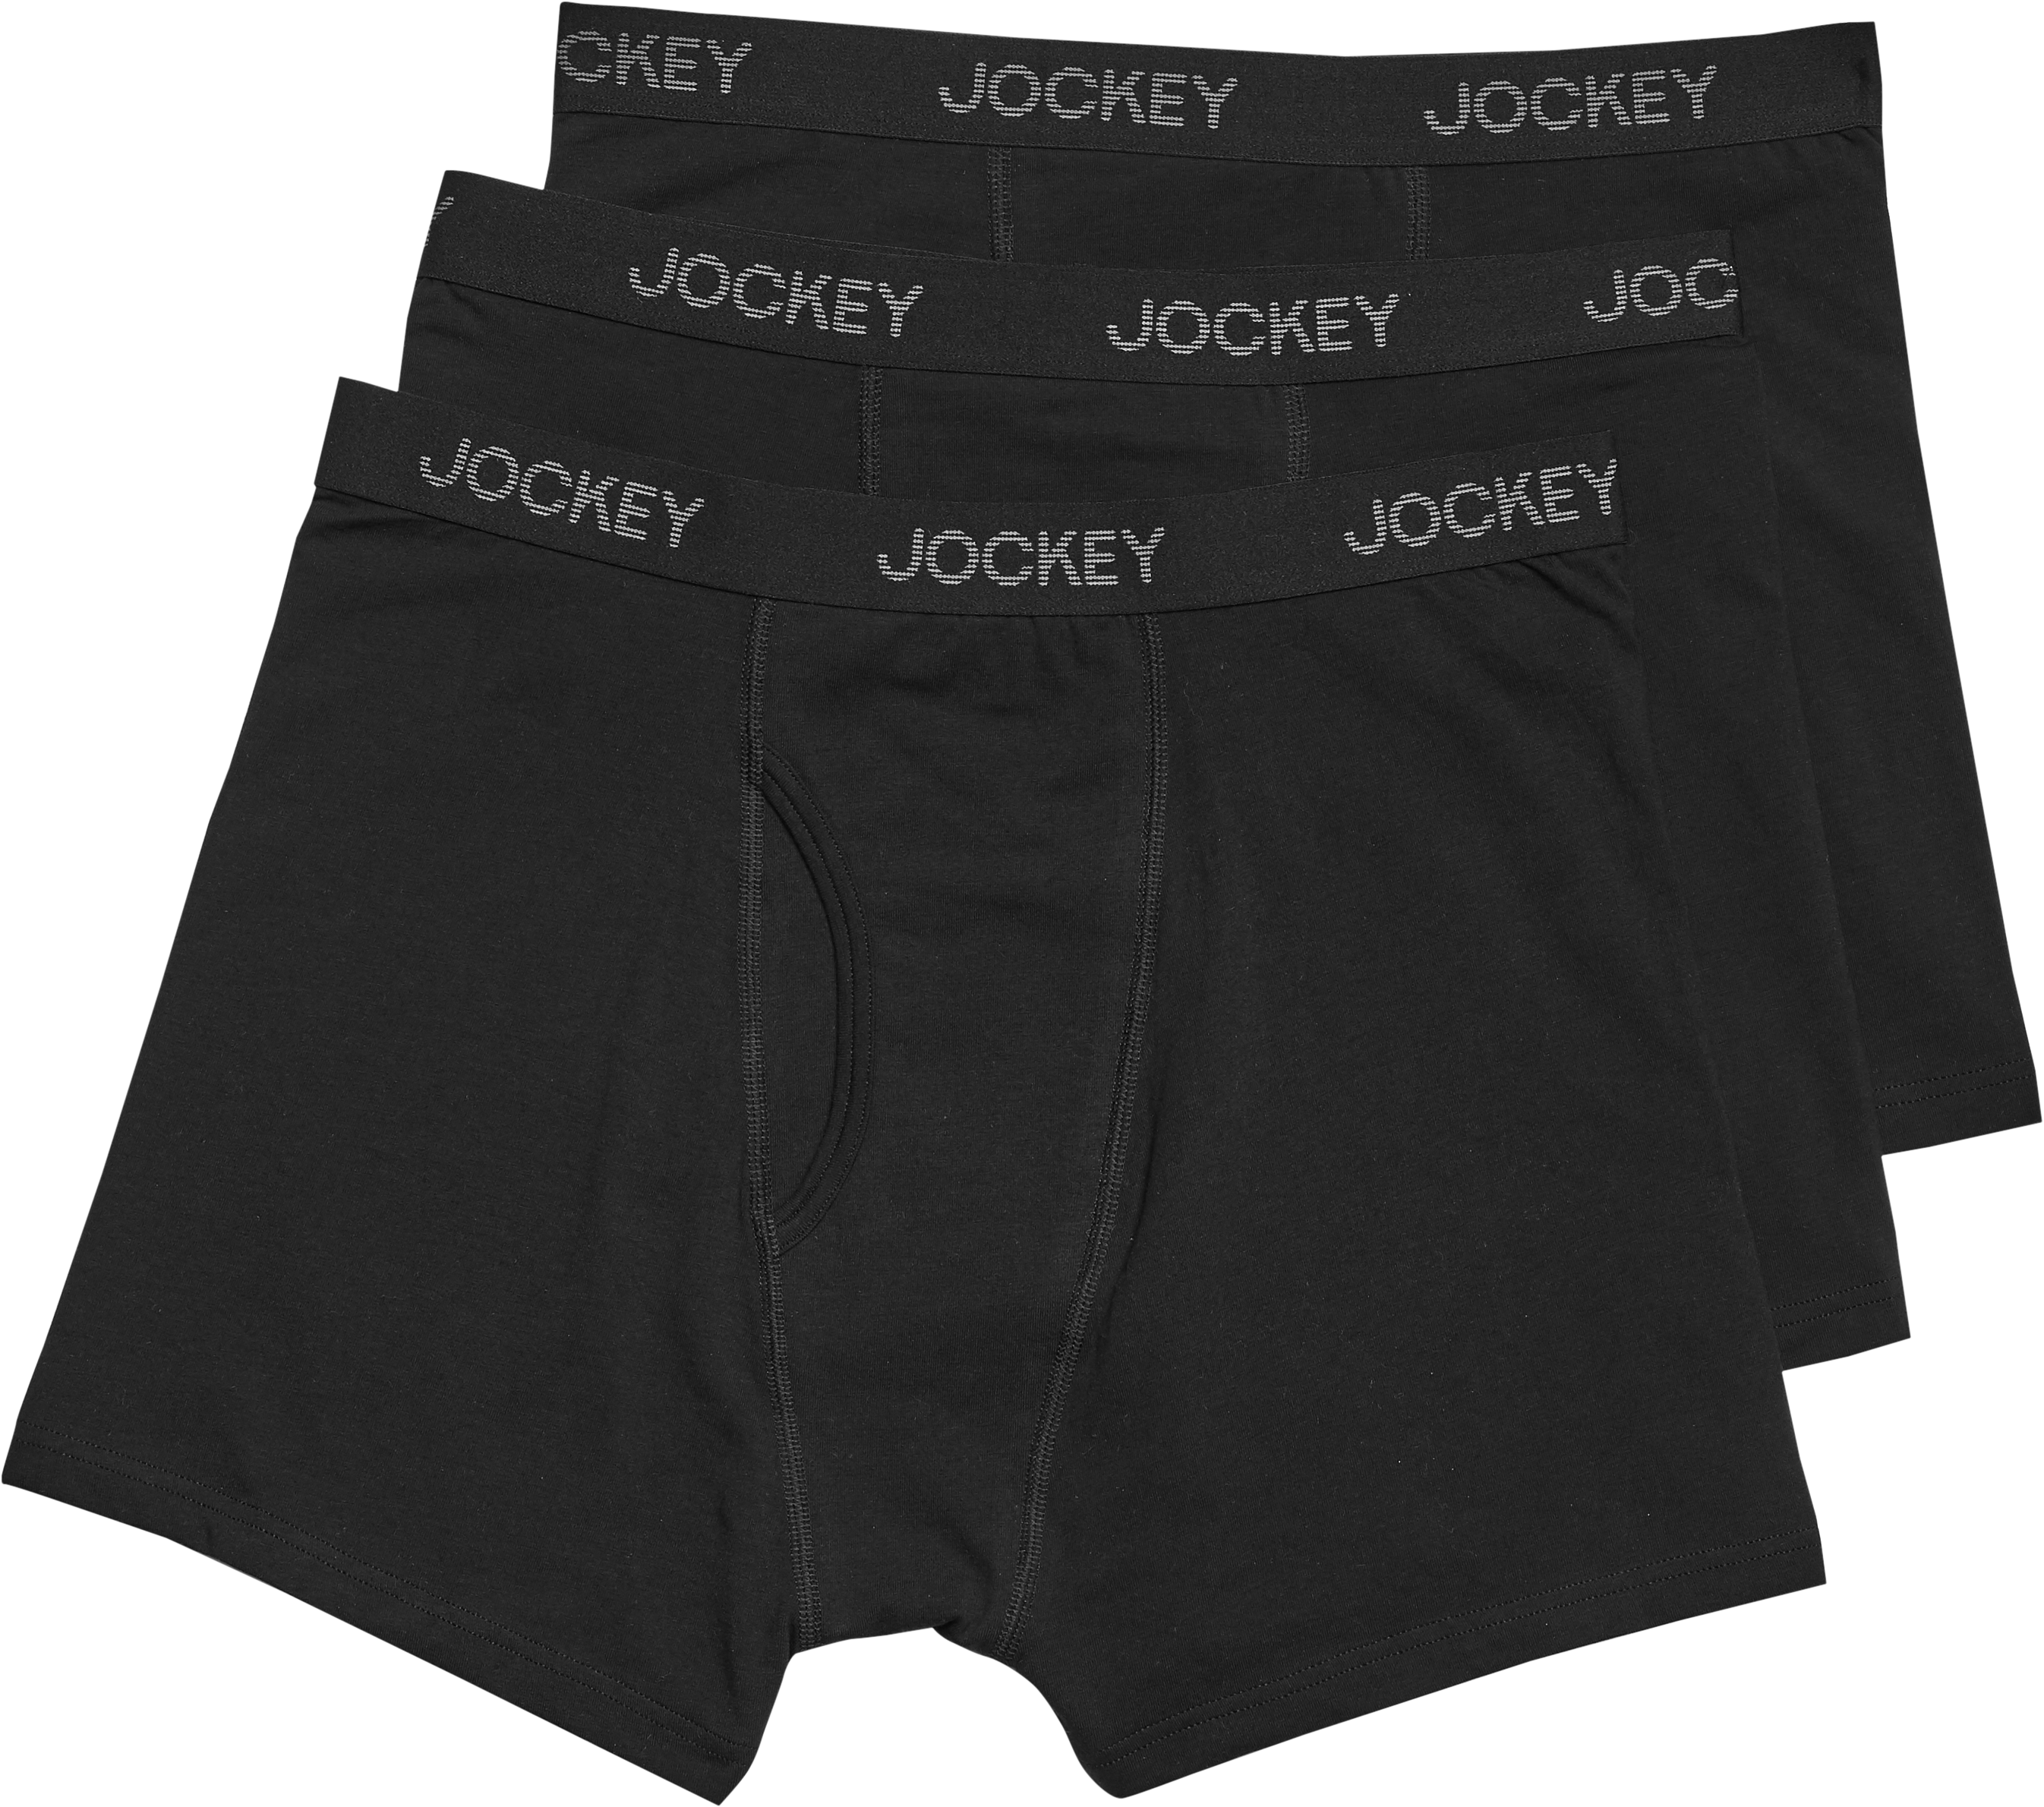 Jockey Boxer Briefs 3-pack, Men's